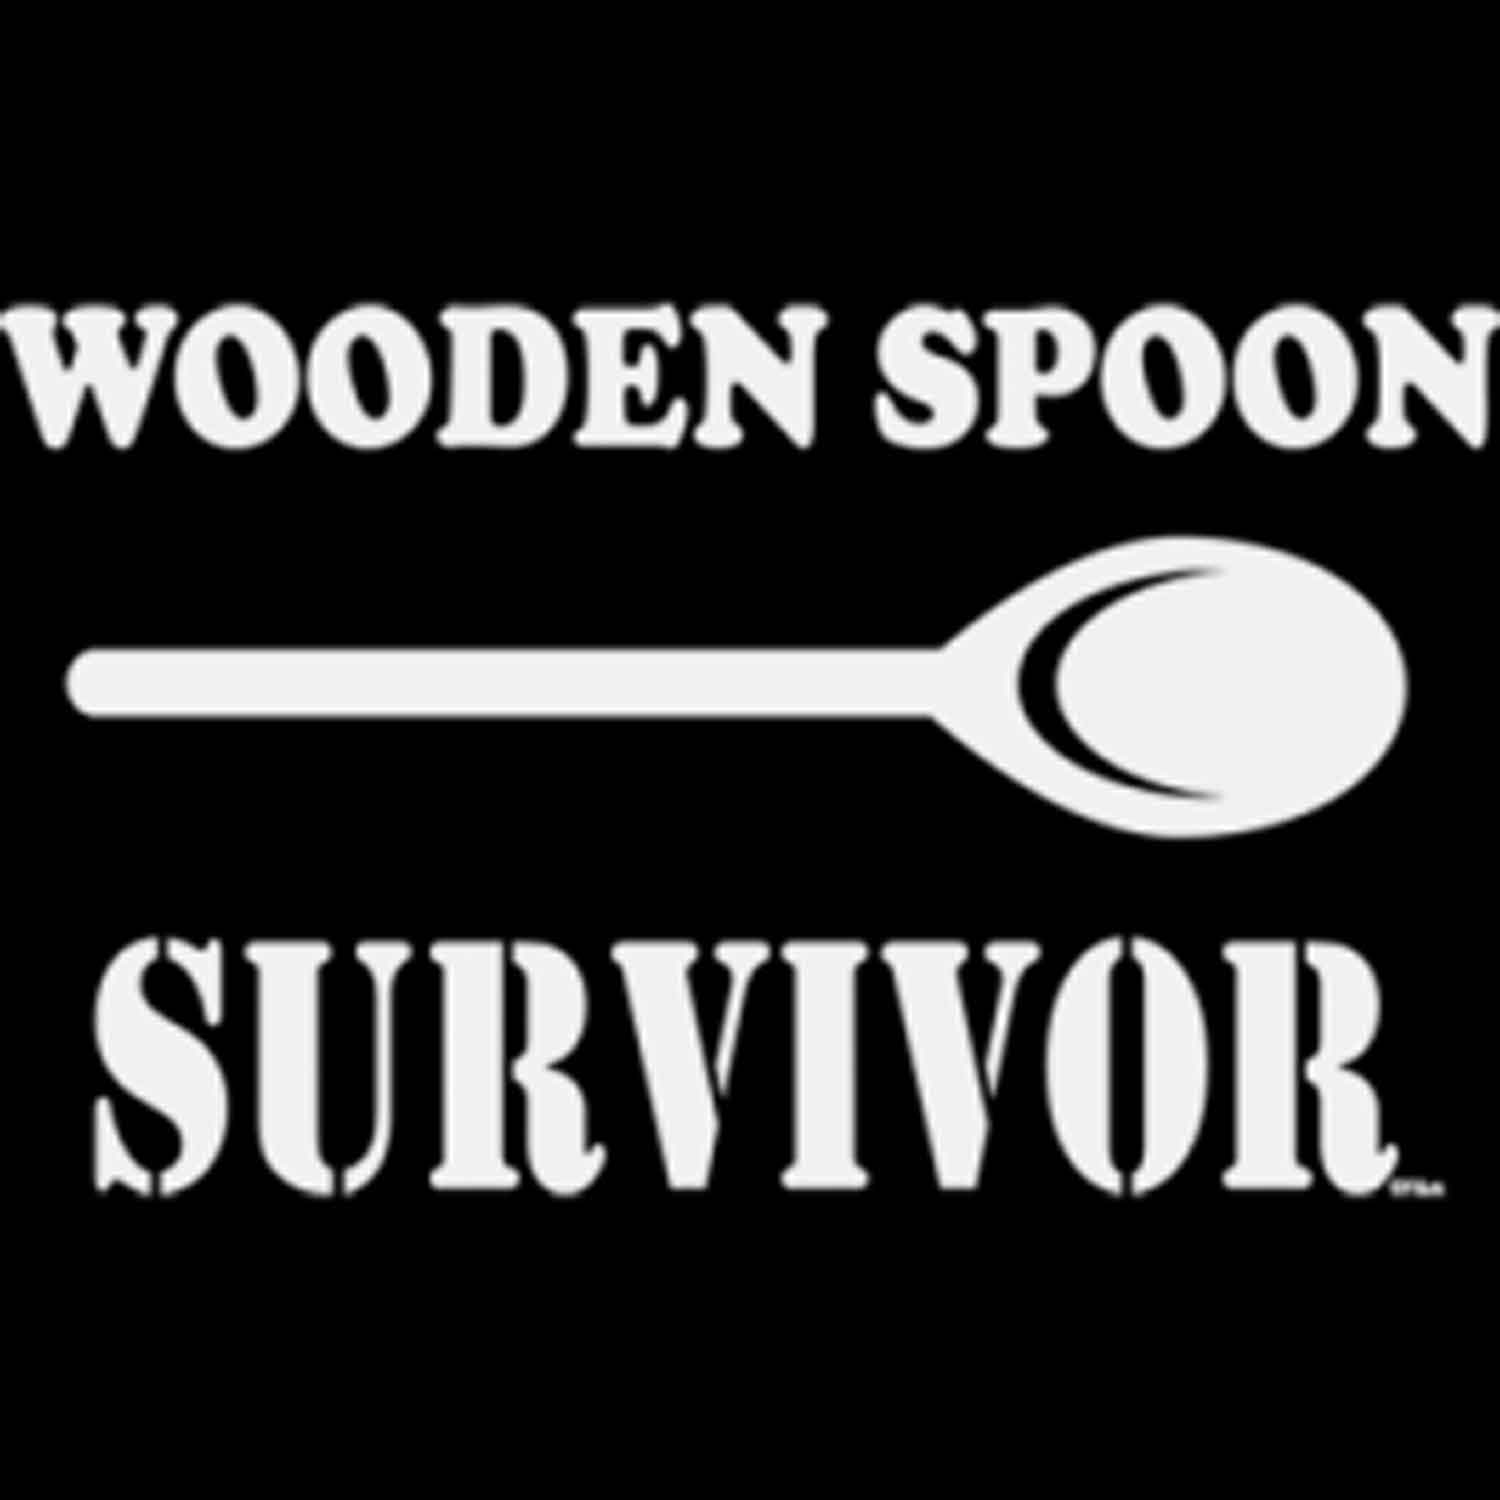 Wooden Spoon Survivor Printed T-Shirt-Black